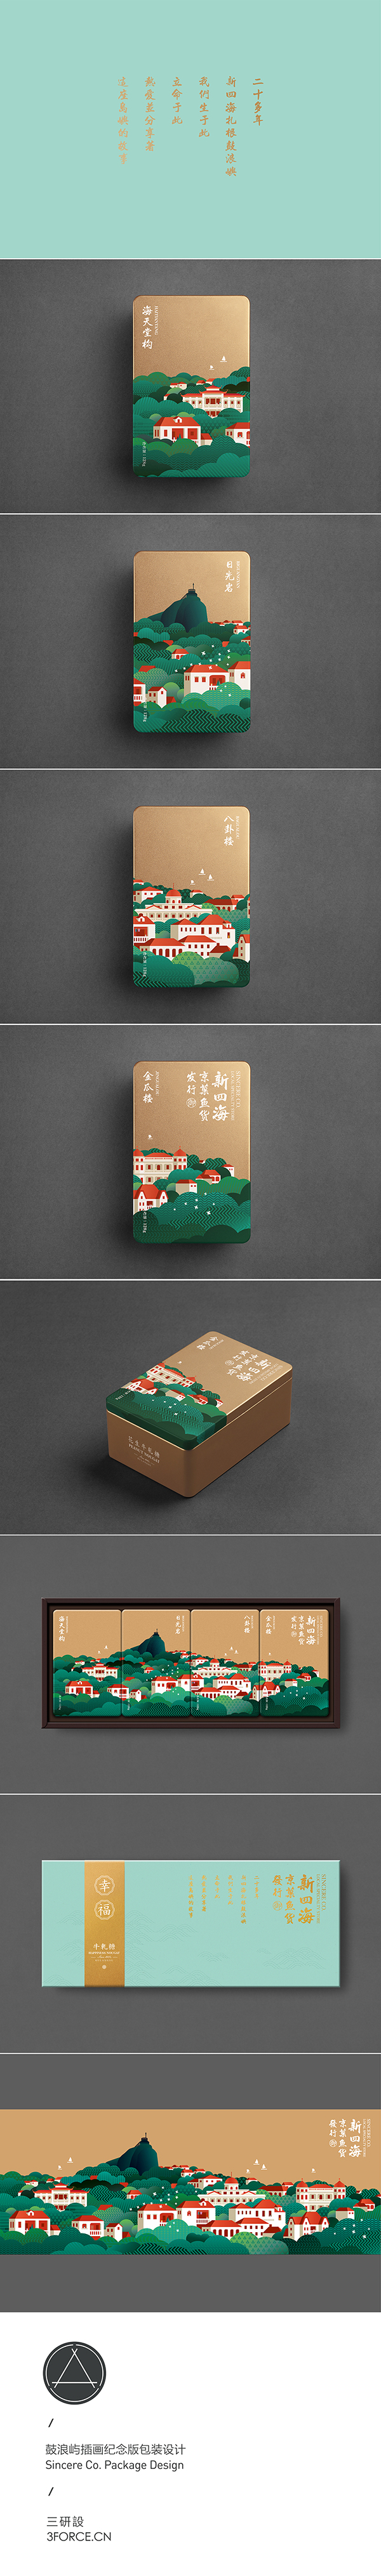 Sincere Co. Nougat Packaging / 新四海牛軋糖包裝設計